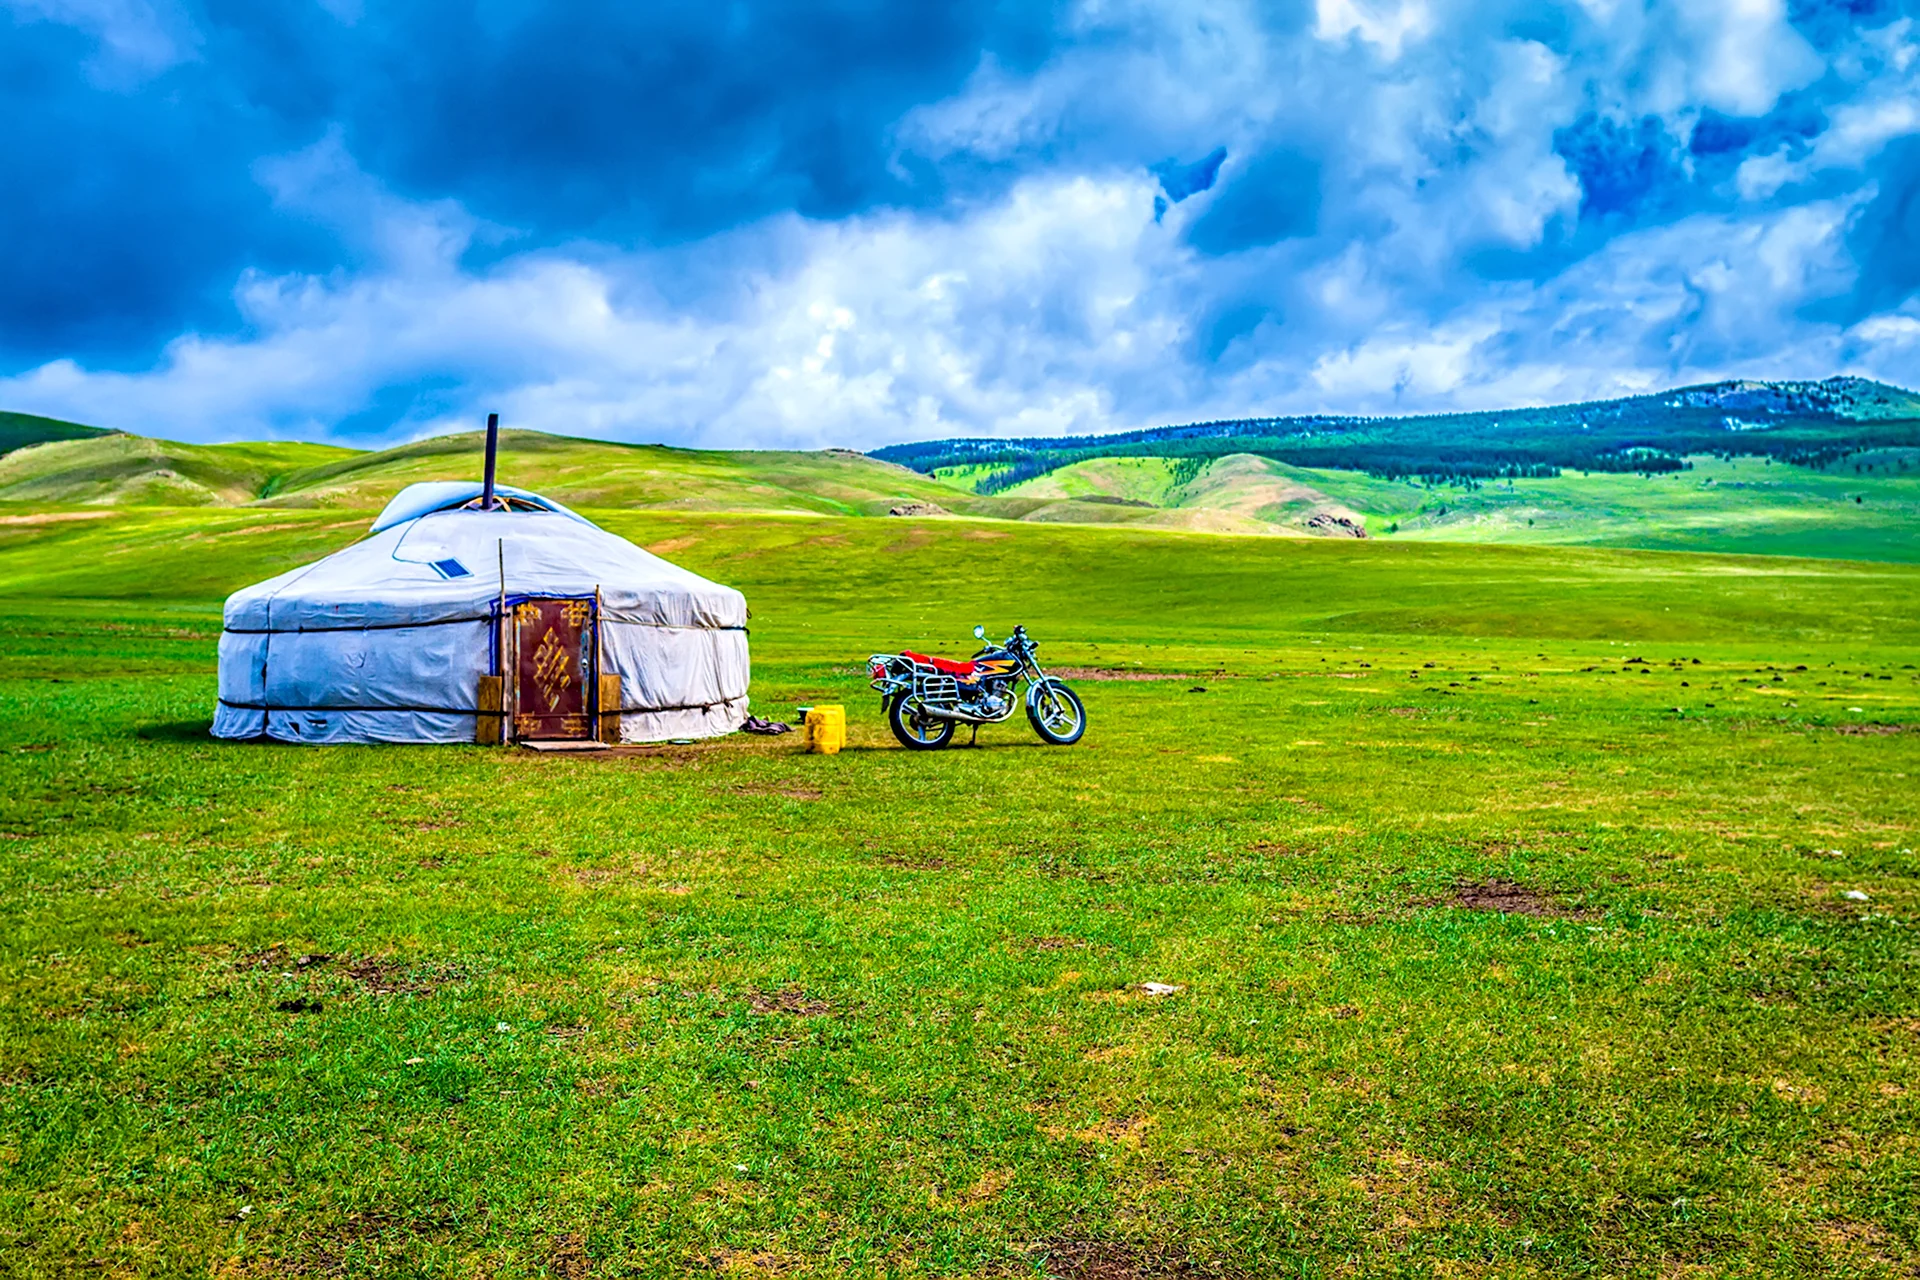 Монголия степь юрта